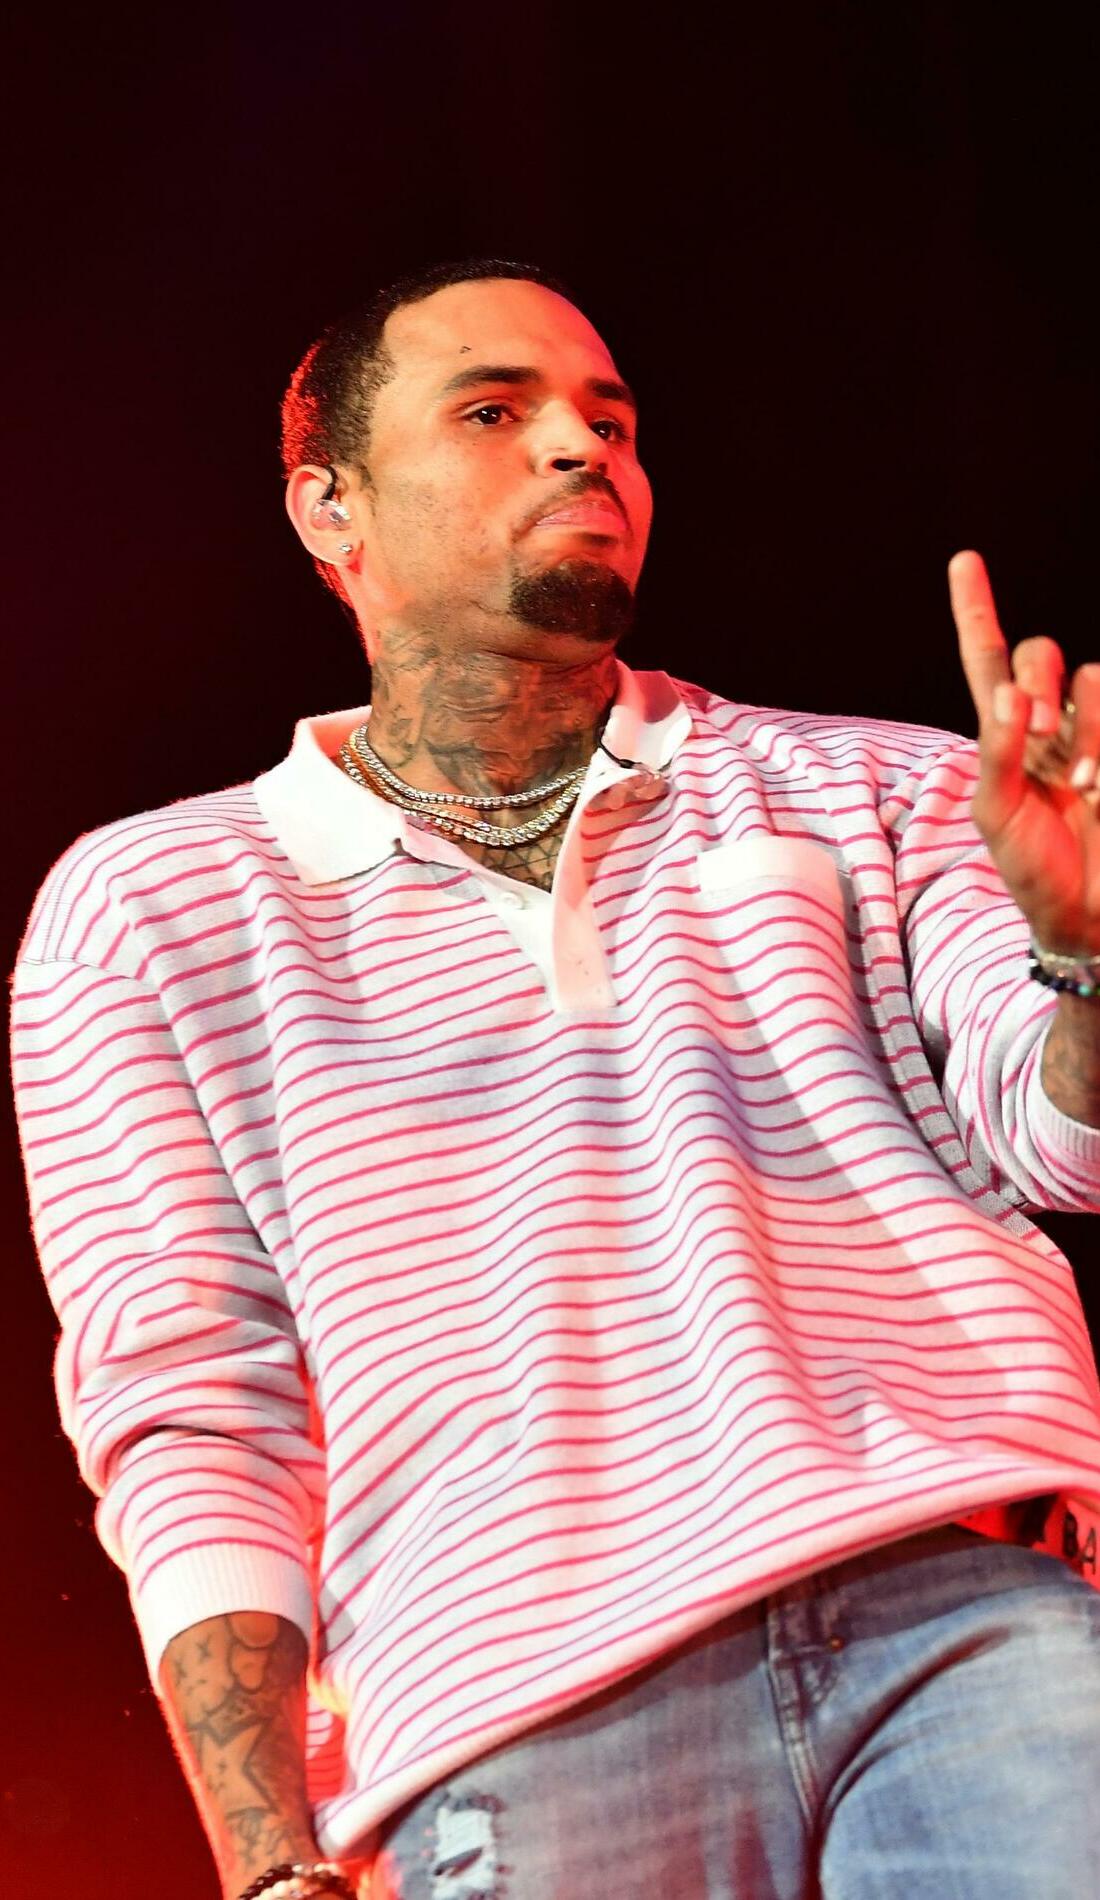 A Chris Brown live event